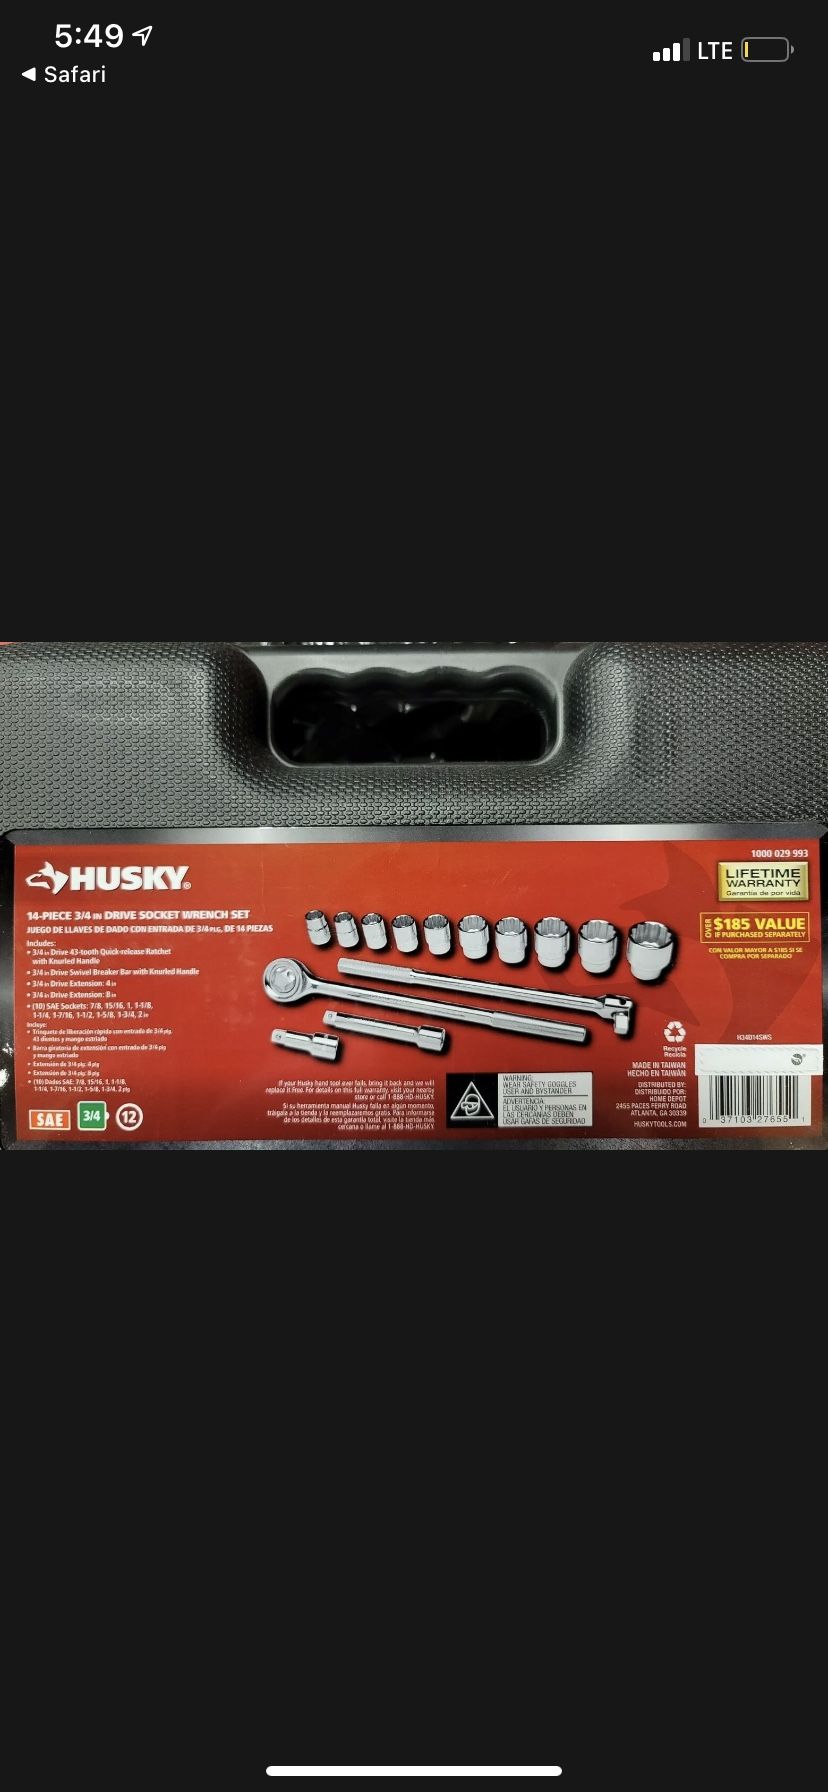 Husky H34D14SWS 14-piece 3/4" DRIVE SOCKET WRENCH SET BRAND NEW